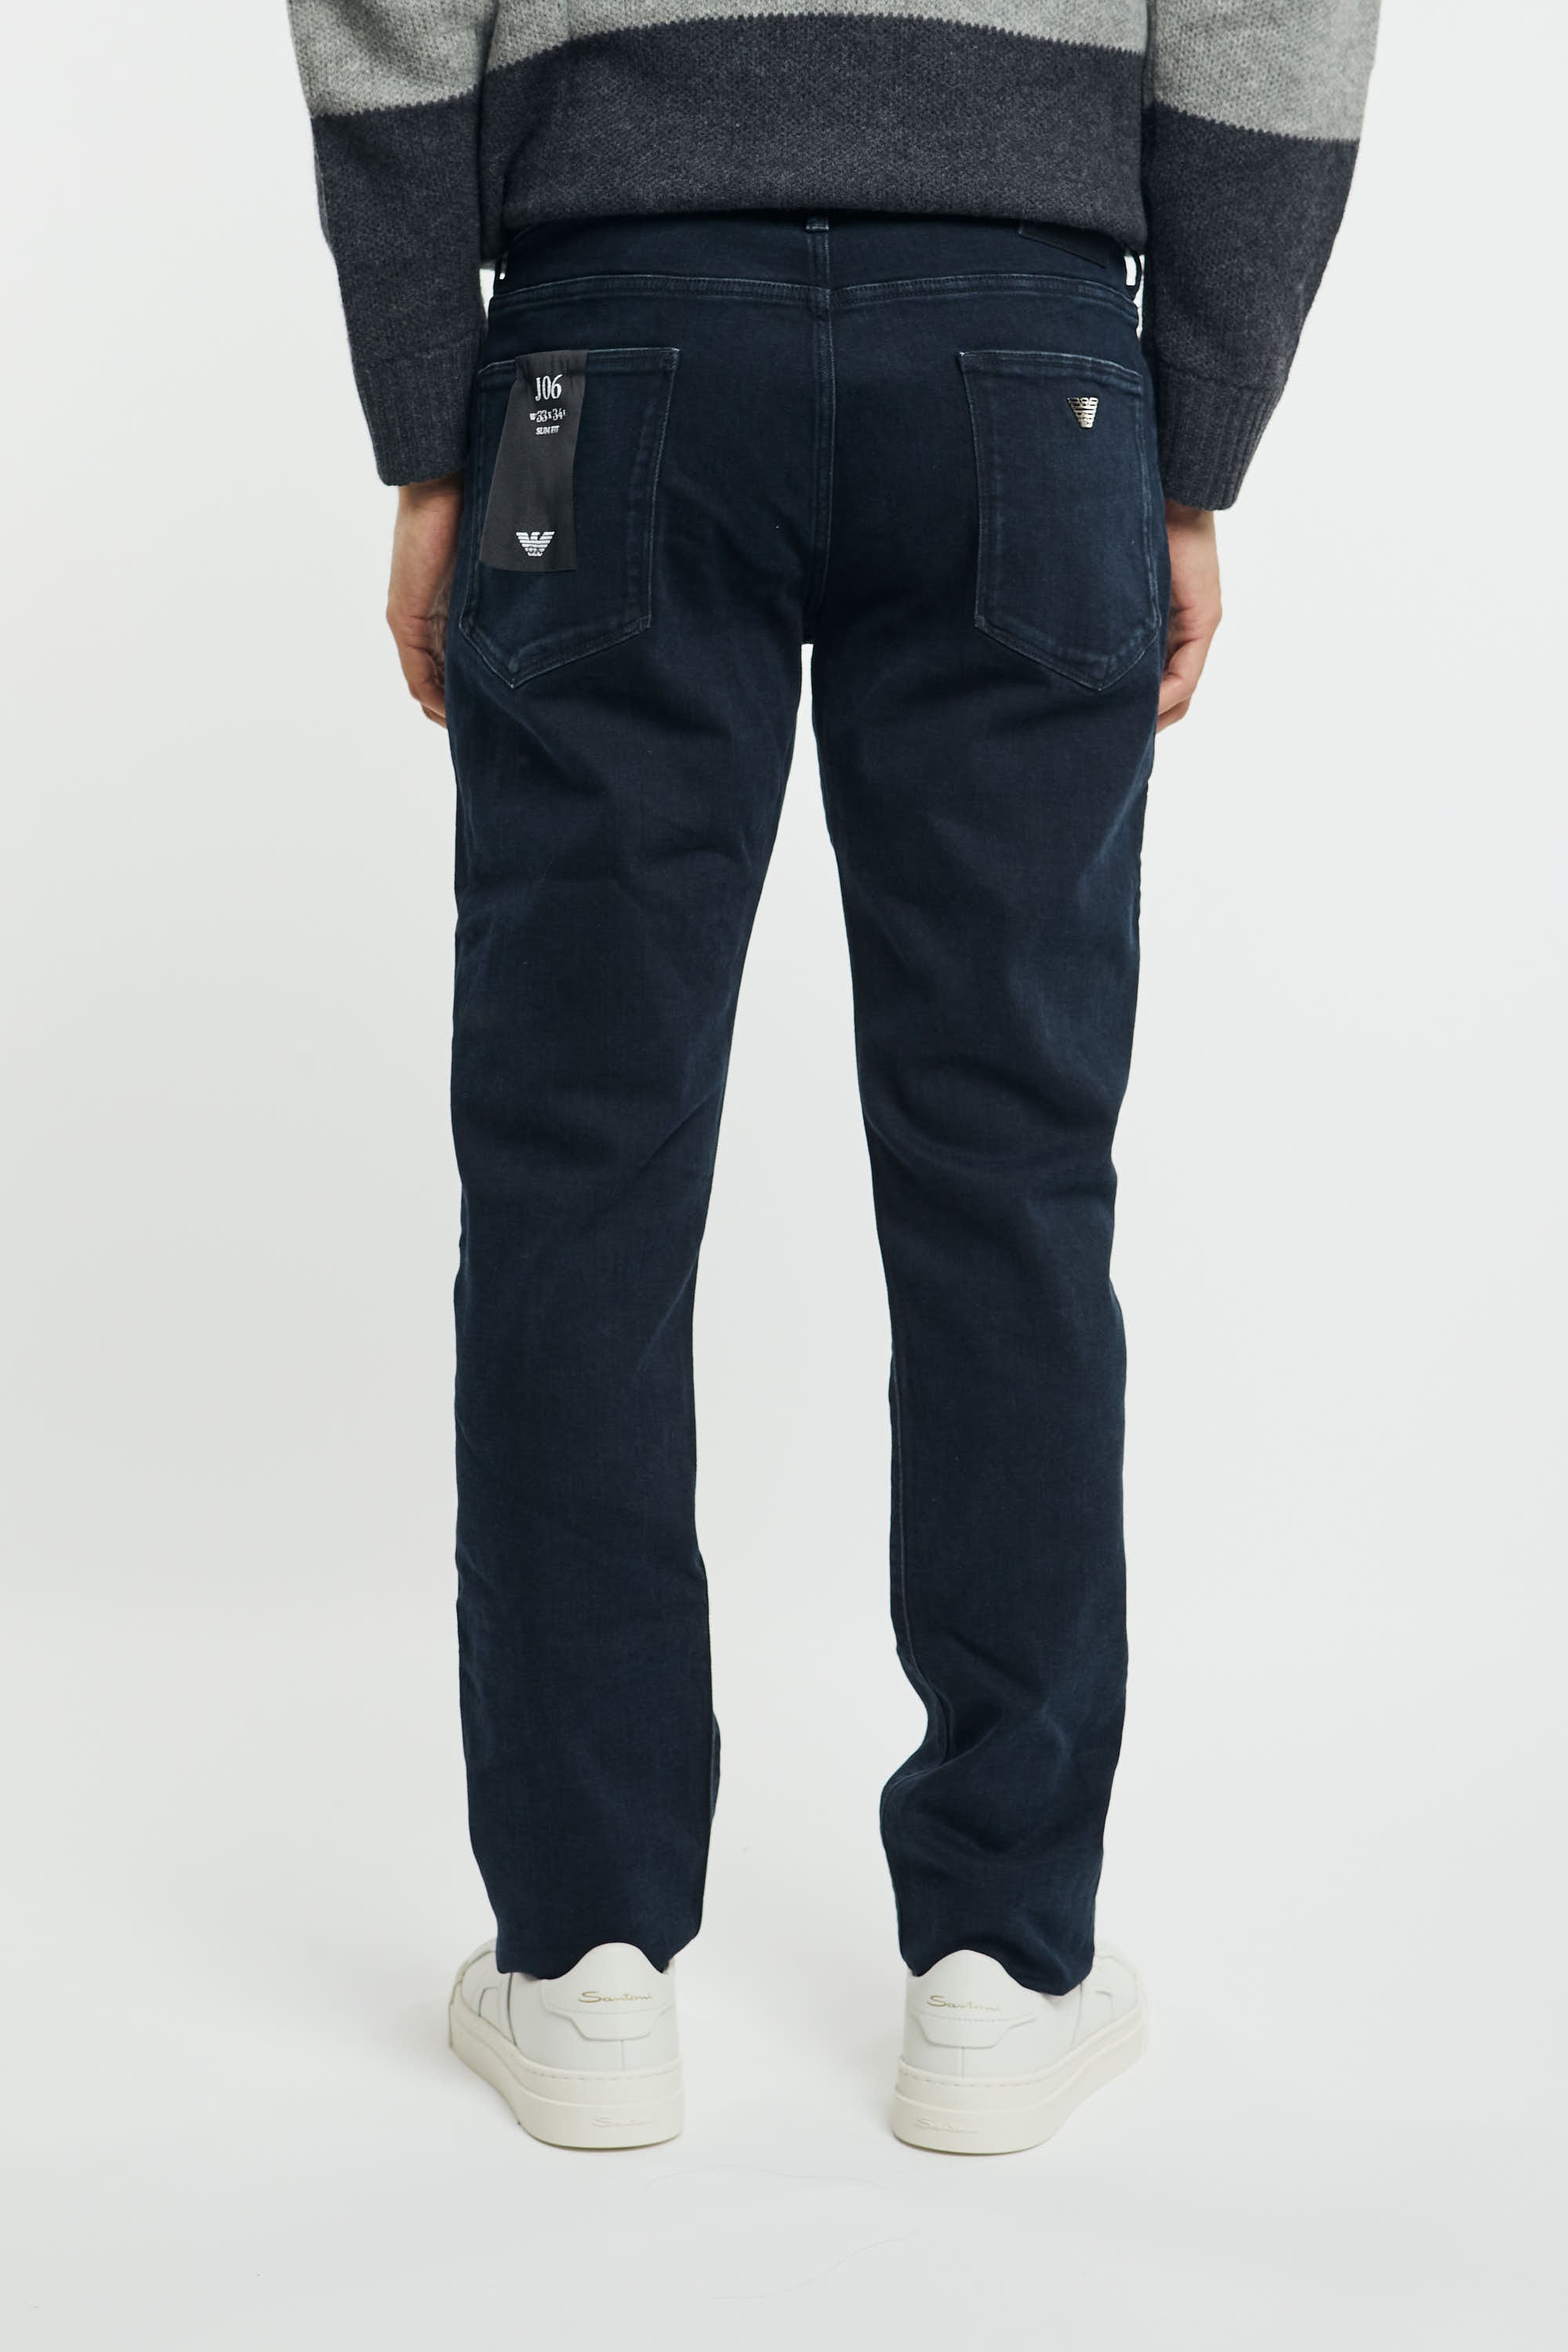 Emporio Armani Jeans J06 Slim Fit in Blue Stretch Cotton Denim - 6